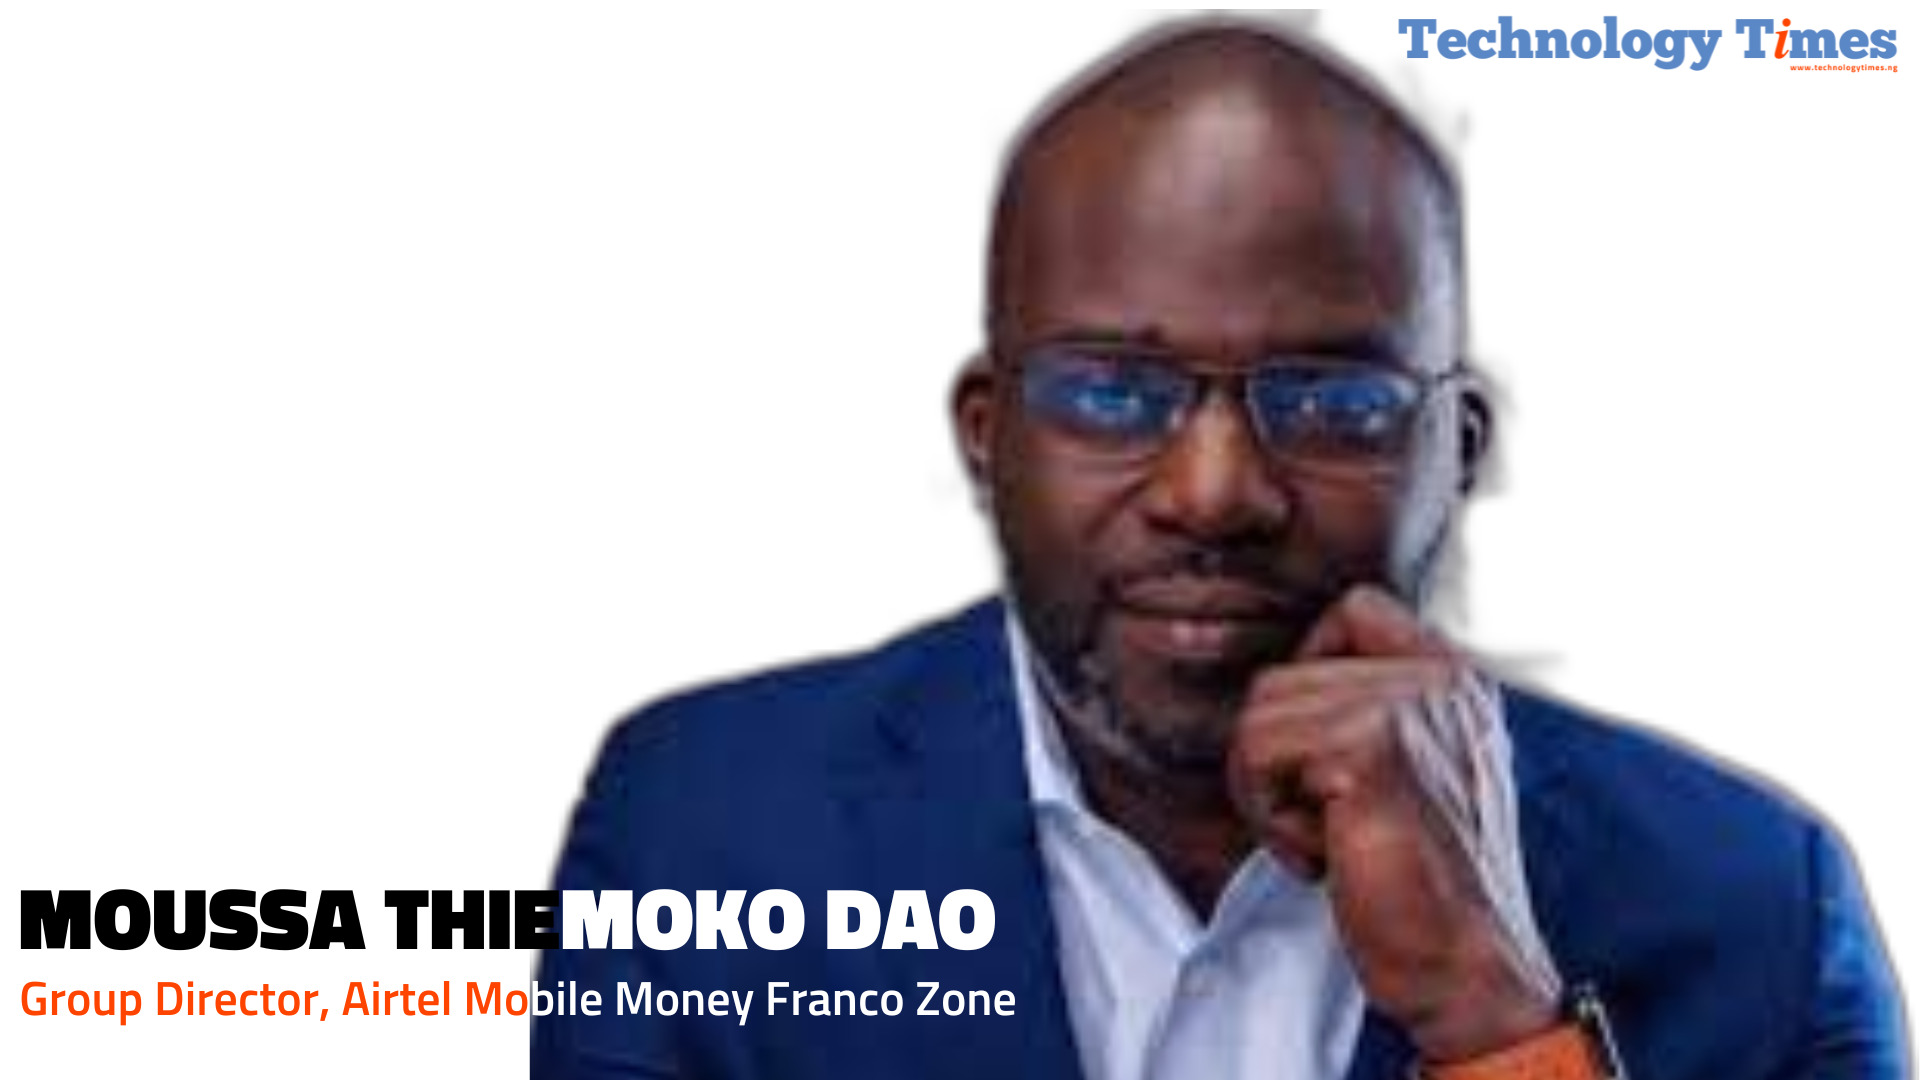 airtel-mobile-money-africa-pentration-plan-moussa-thiemoko-dao